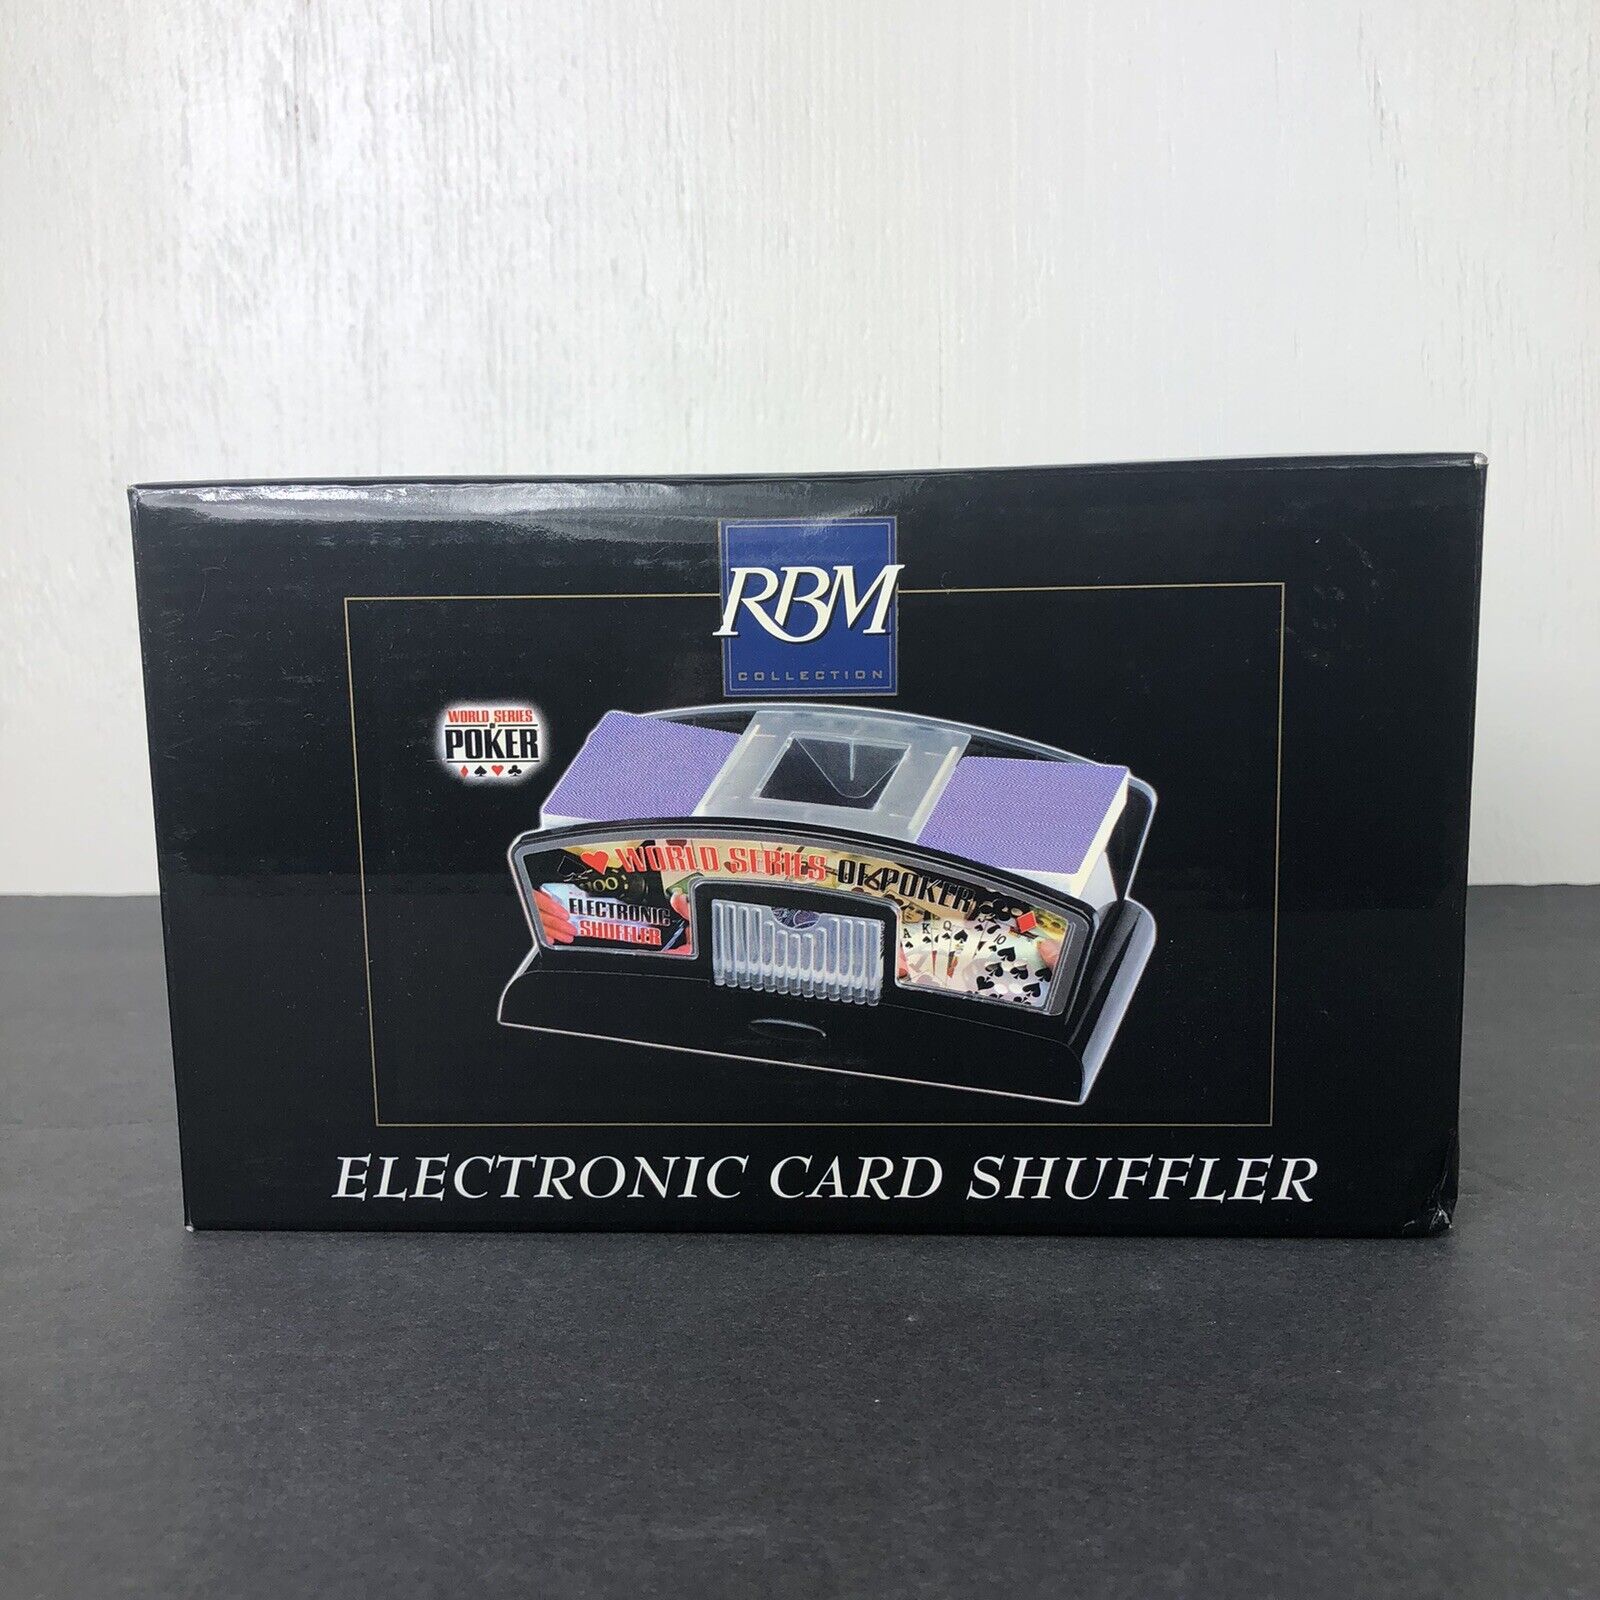 New Rbm Collection World Series Poker Electronic Card Shuffler